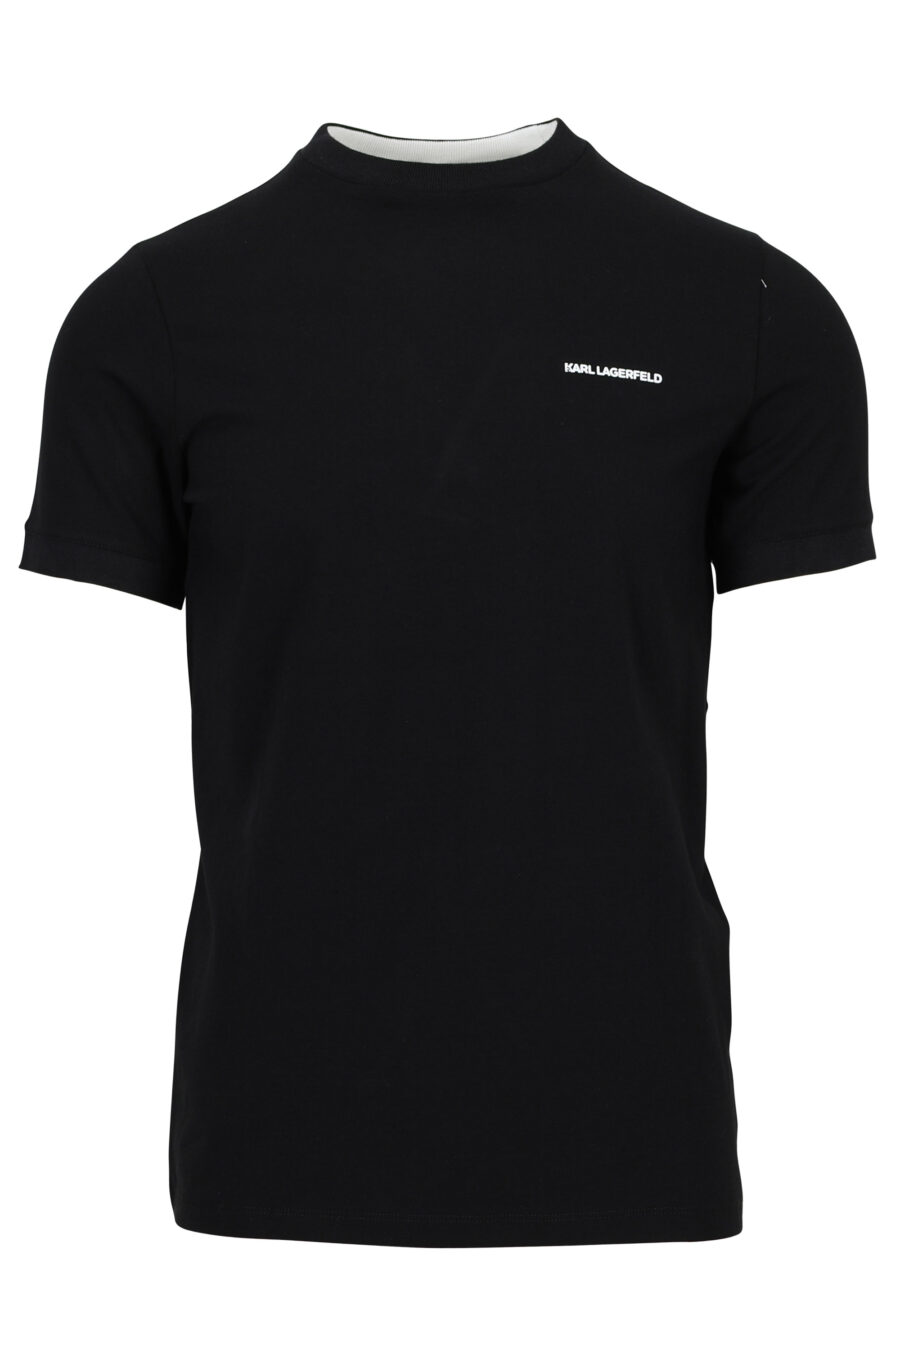 Camiseta negra con minilogo blanco lateral - 4062226952828